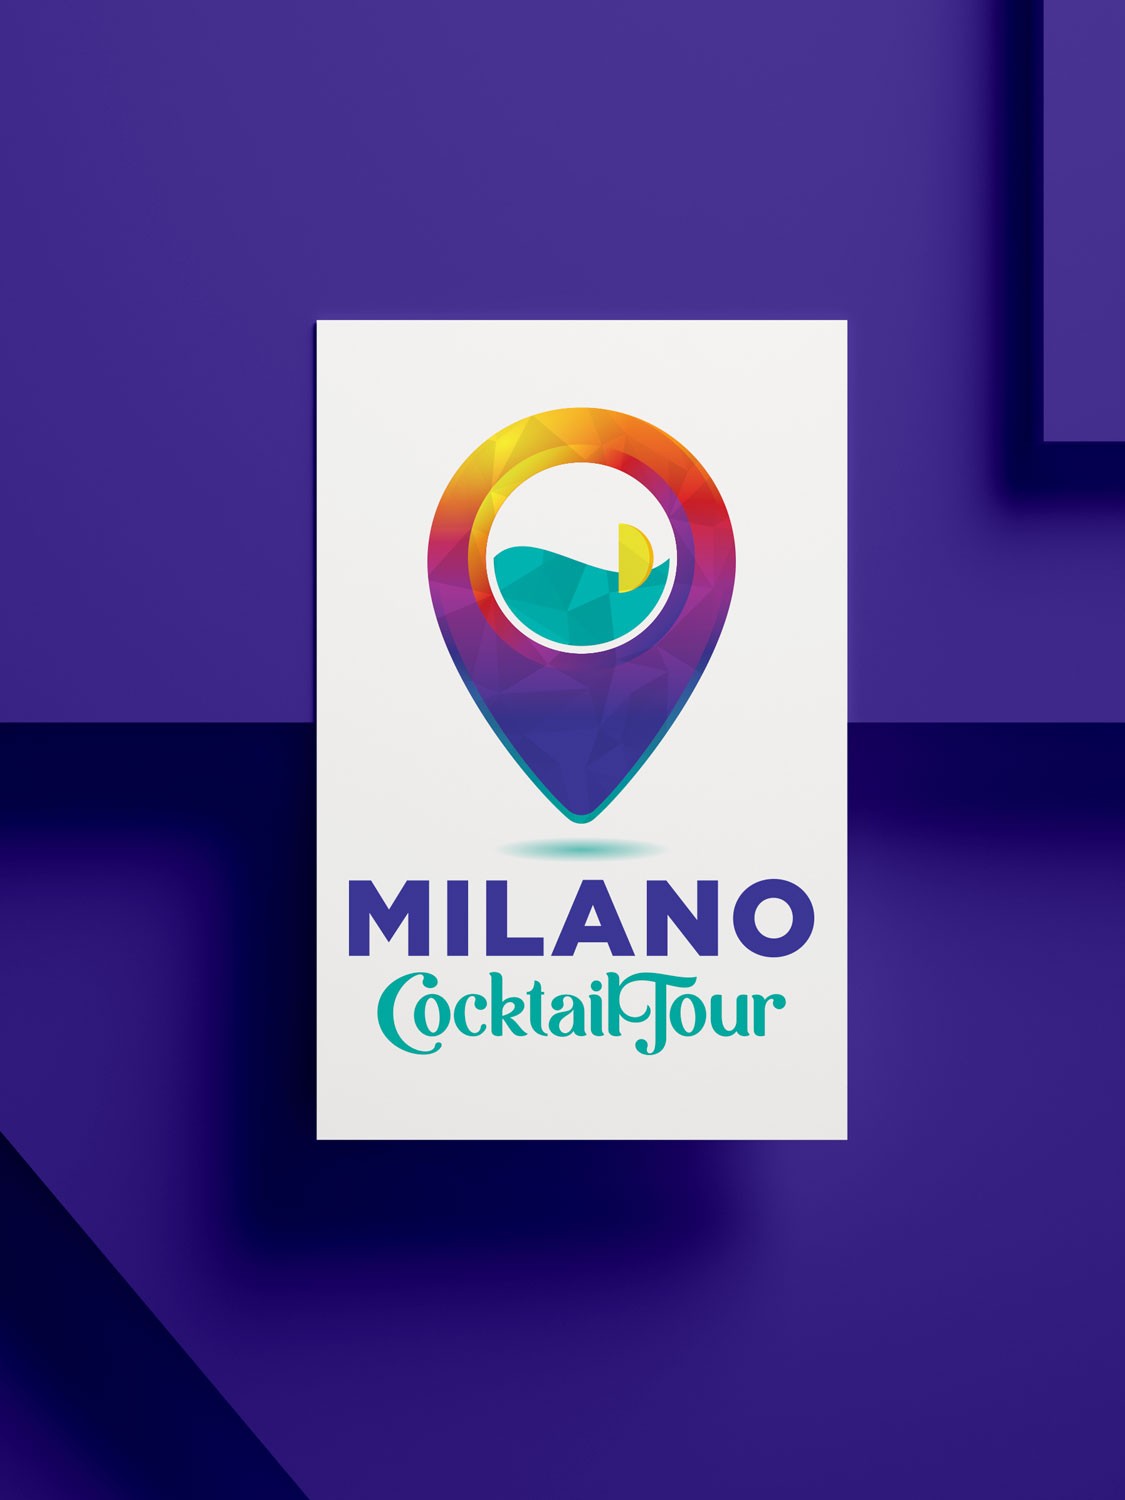 Milano cocktail tour - logo e immagine coordinata